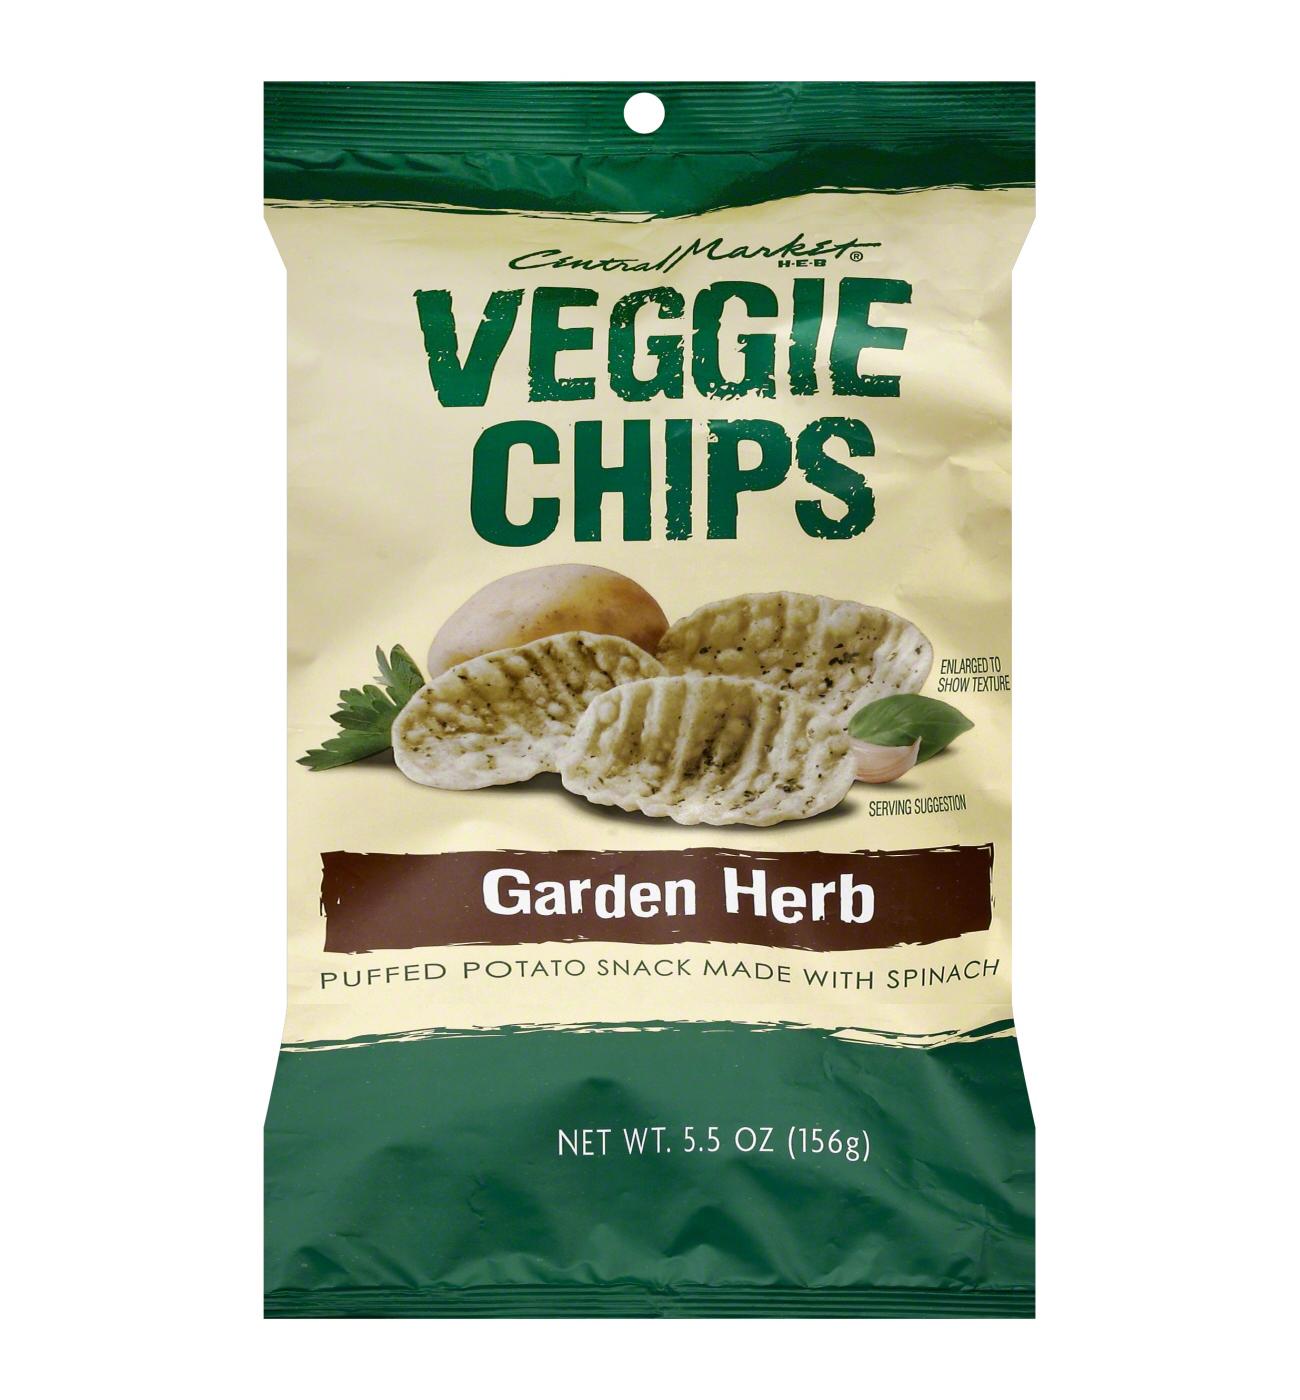 Central Market Garden Herb Veggie Chips; image 1 of 2